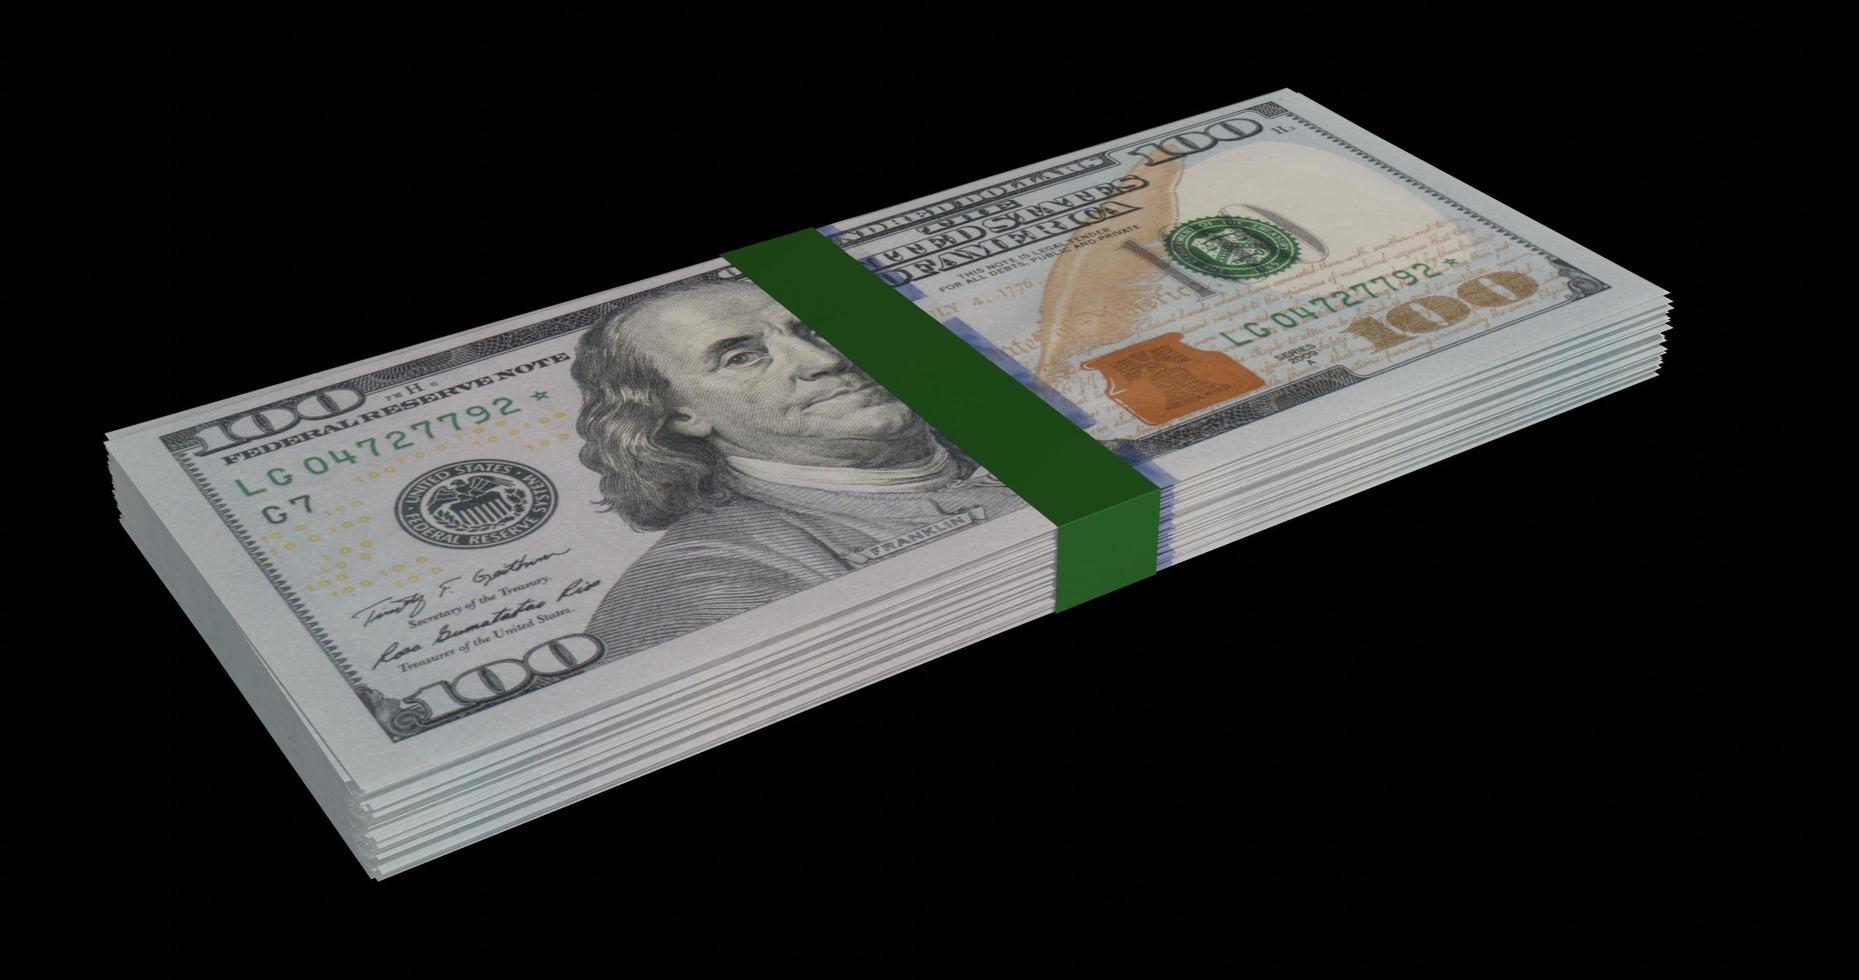 3D render, illustration,Heap of Dollar Bills isolated on black background photo